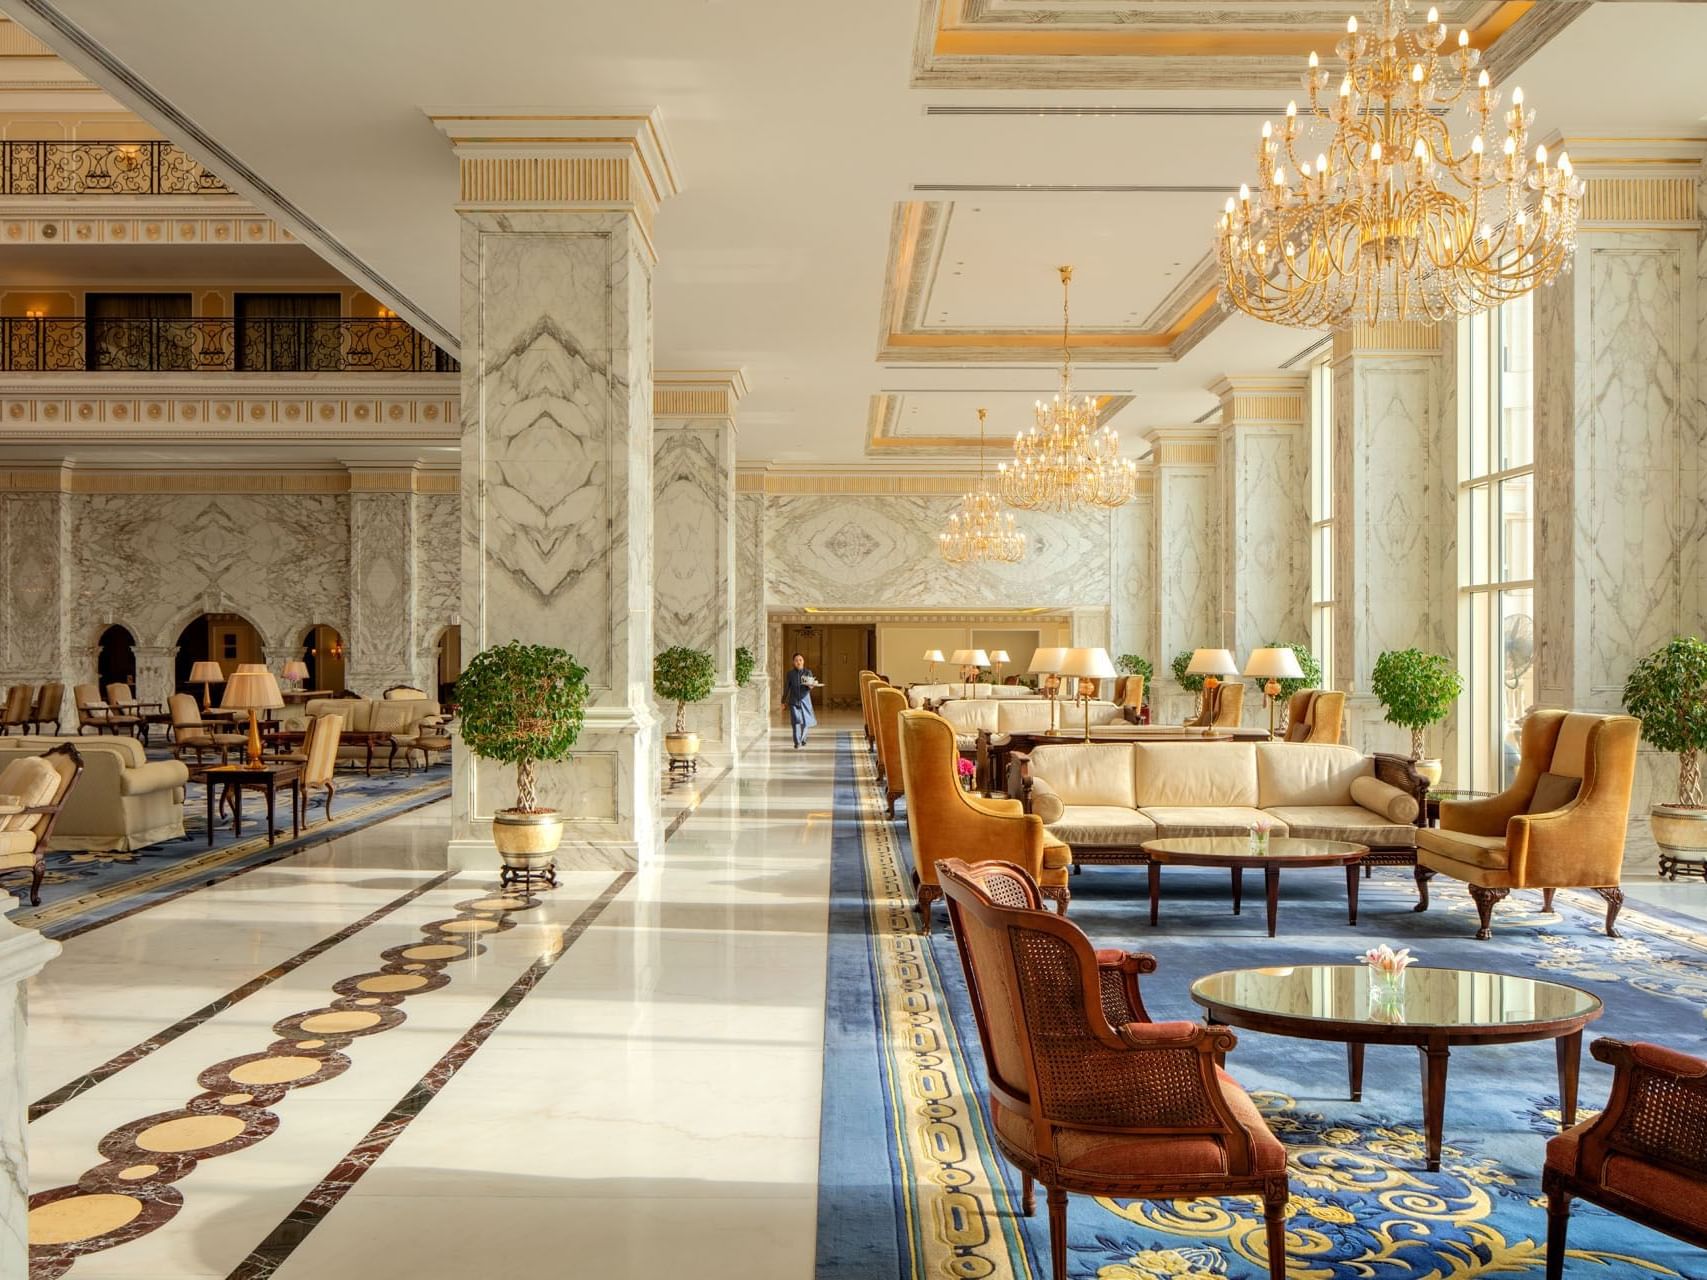 Seating arrangements in Al Liwan Lounge at The Regency Hotel